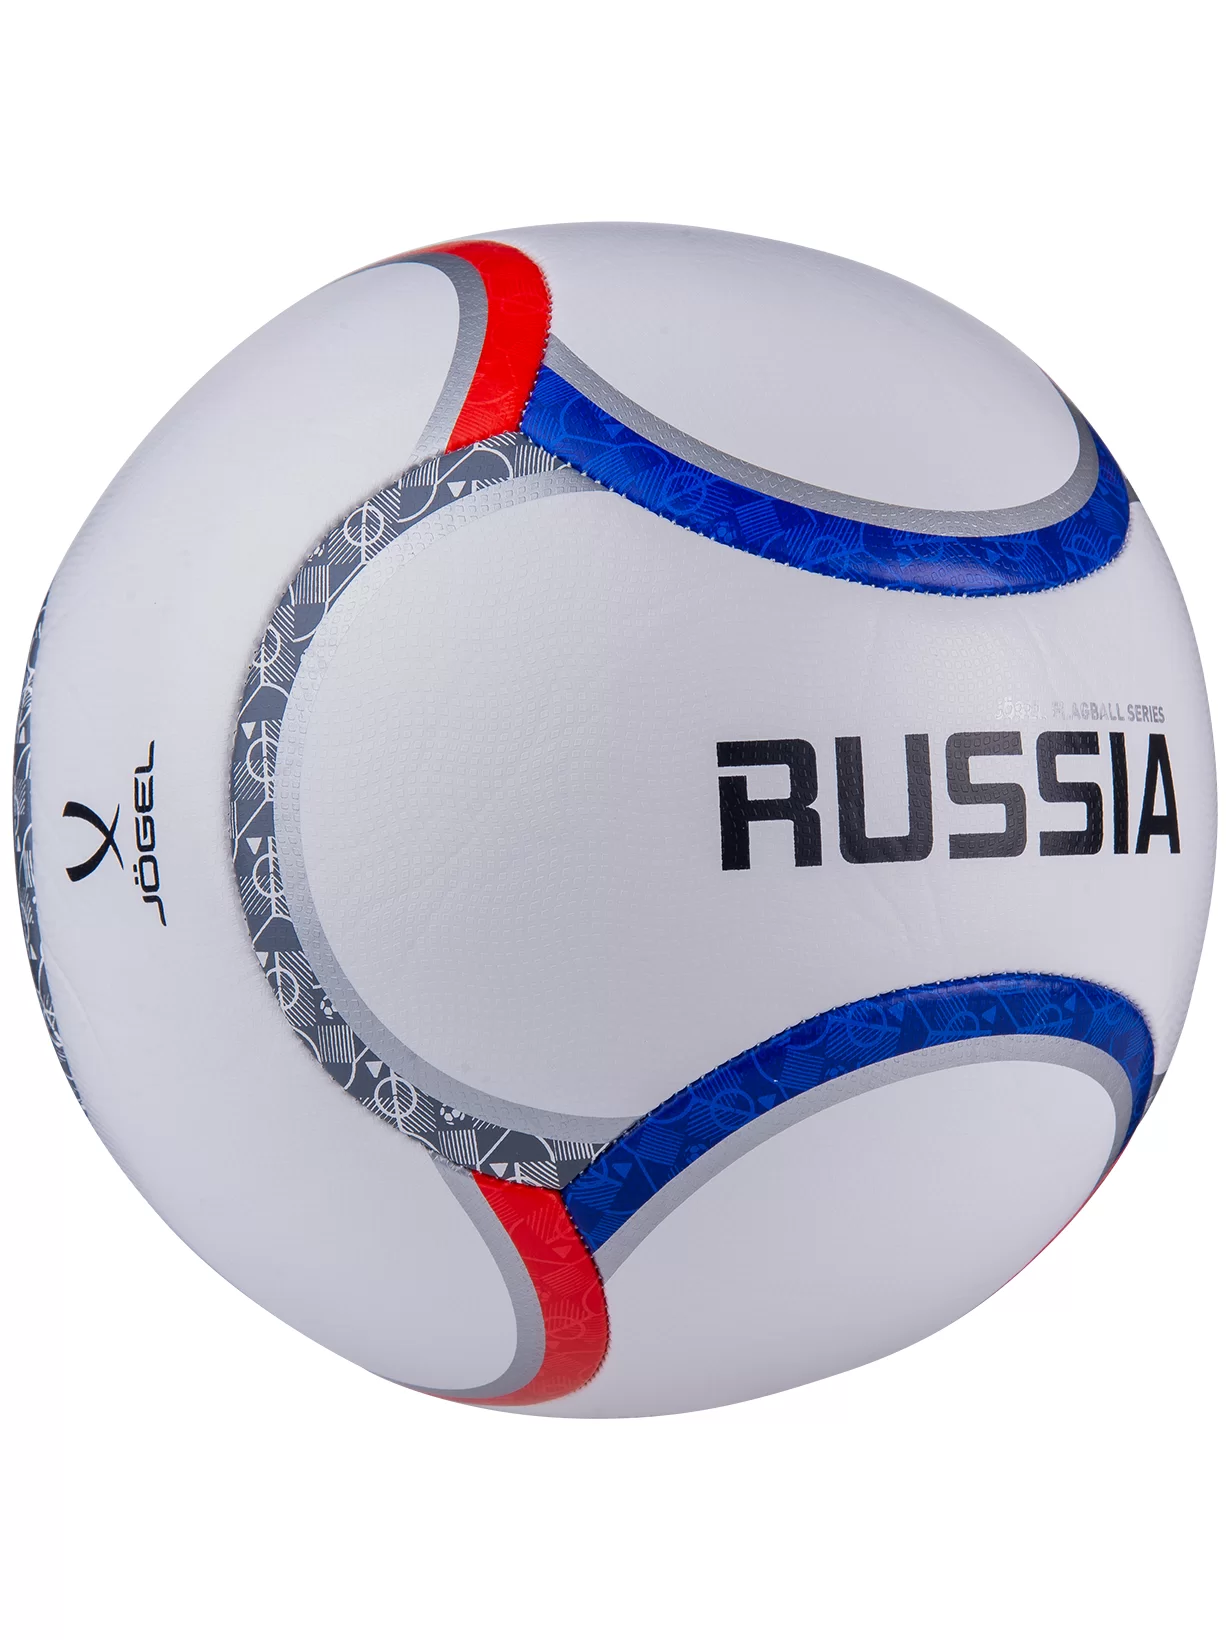 Фото Мяч футбольный Jögel Flagball Russia №5 (BC20) УТ-00016949 со склада магазина СпортСЕ